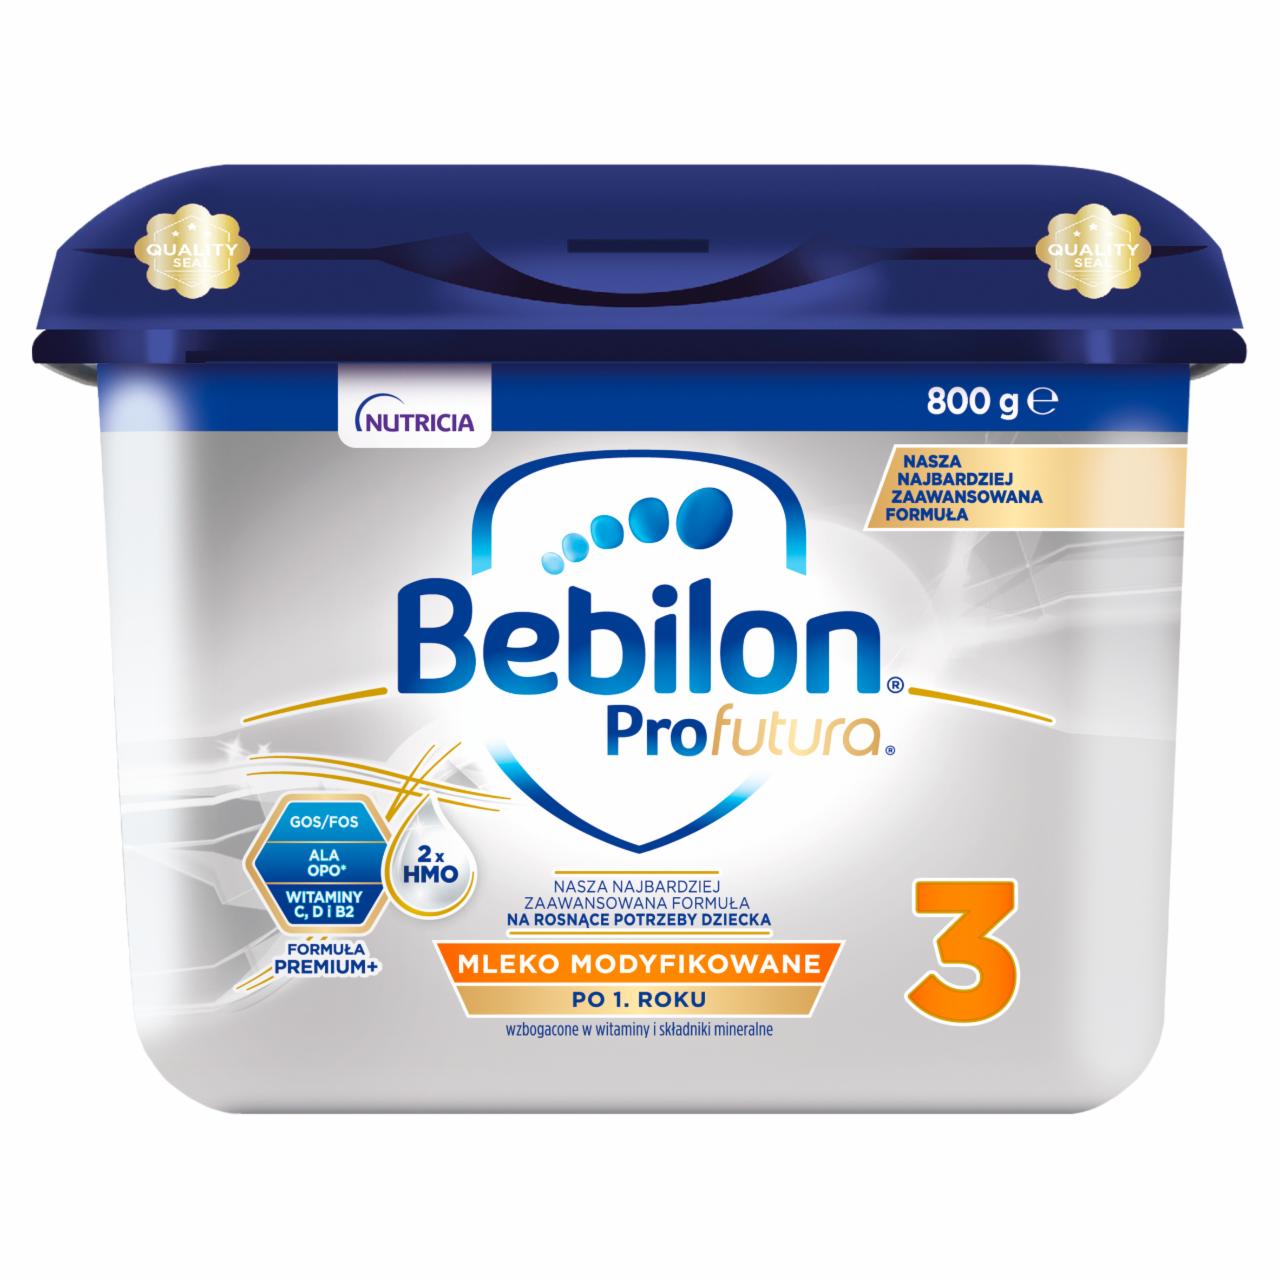 Zdjęcia - Bebilon Profutura 3 Mleko modyfikowane po 1. roku 800 g